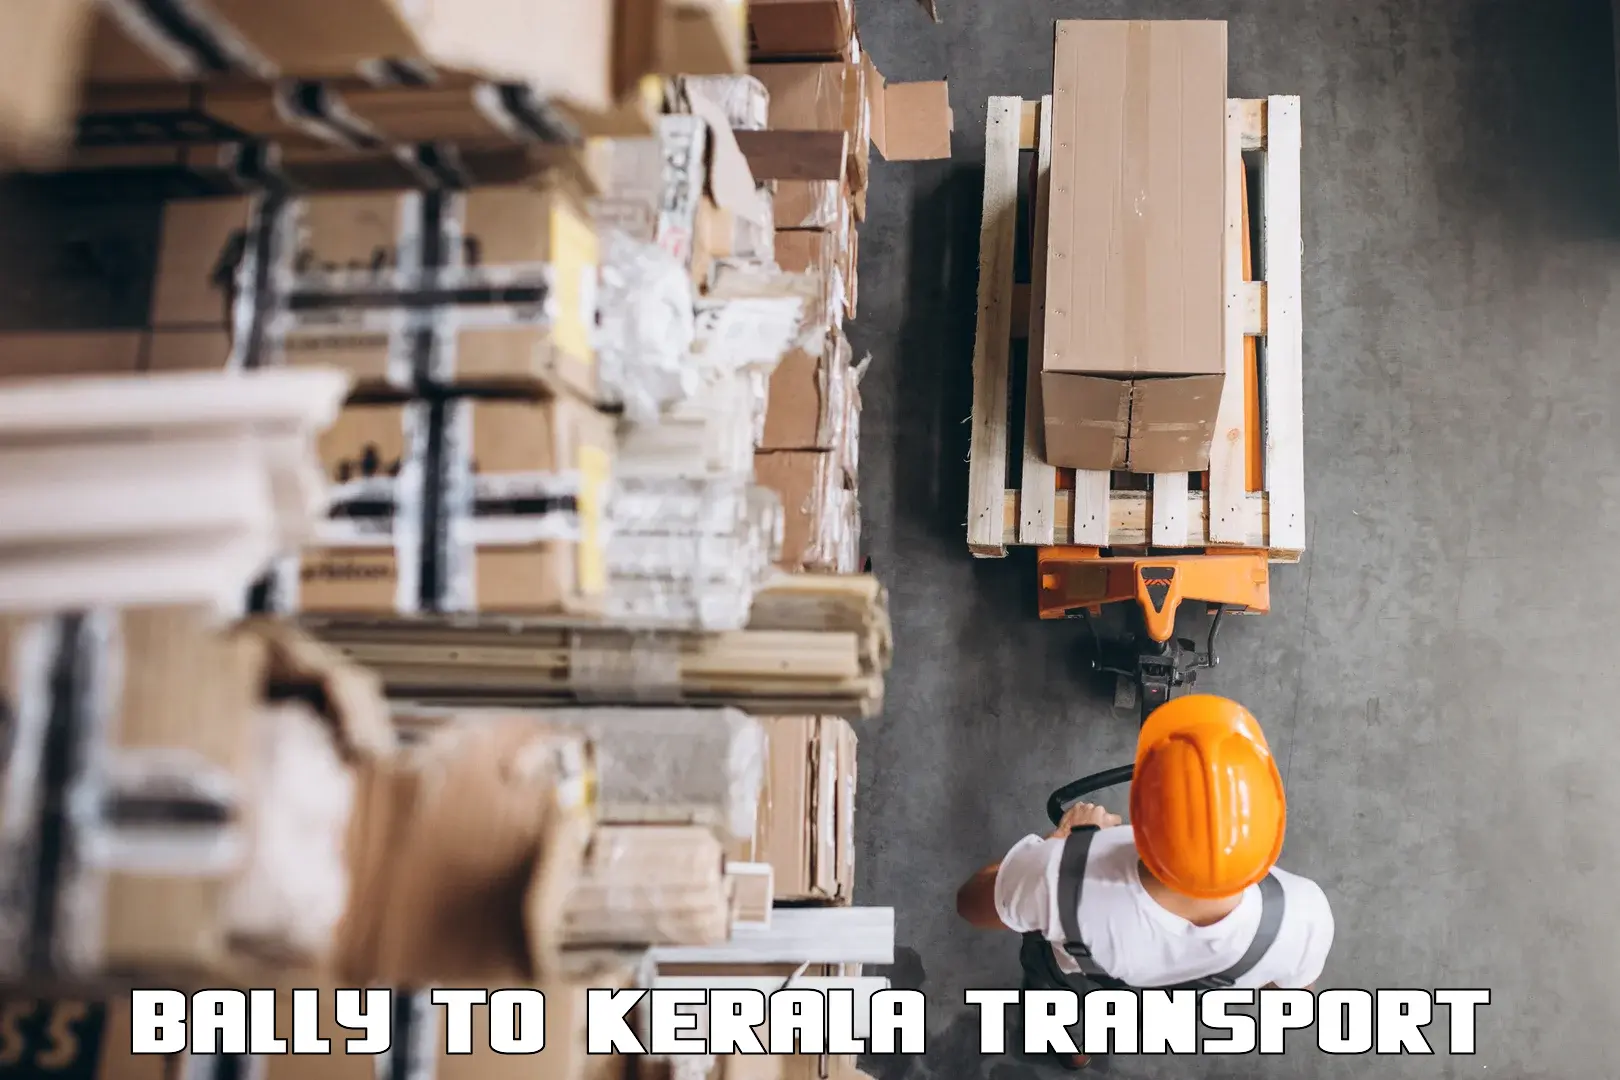 Bike shipping service in Bally to Kerala